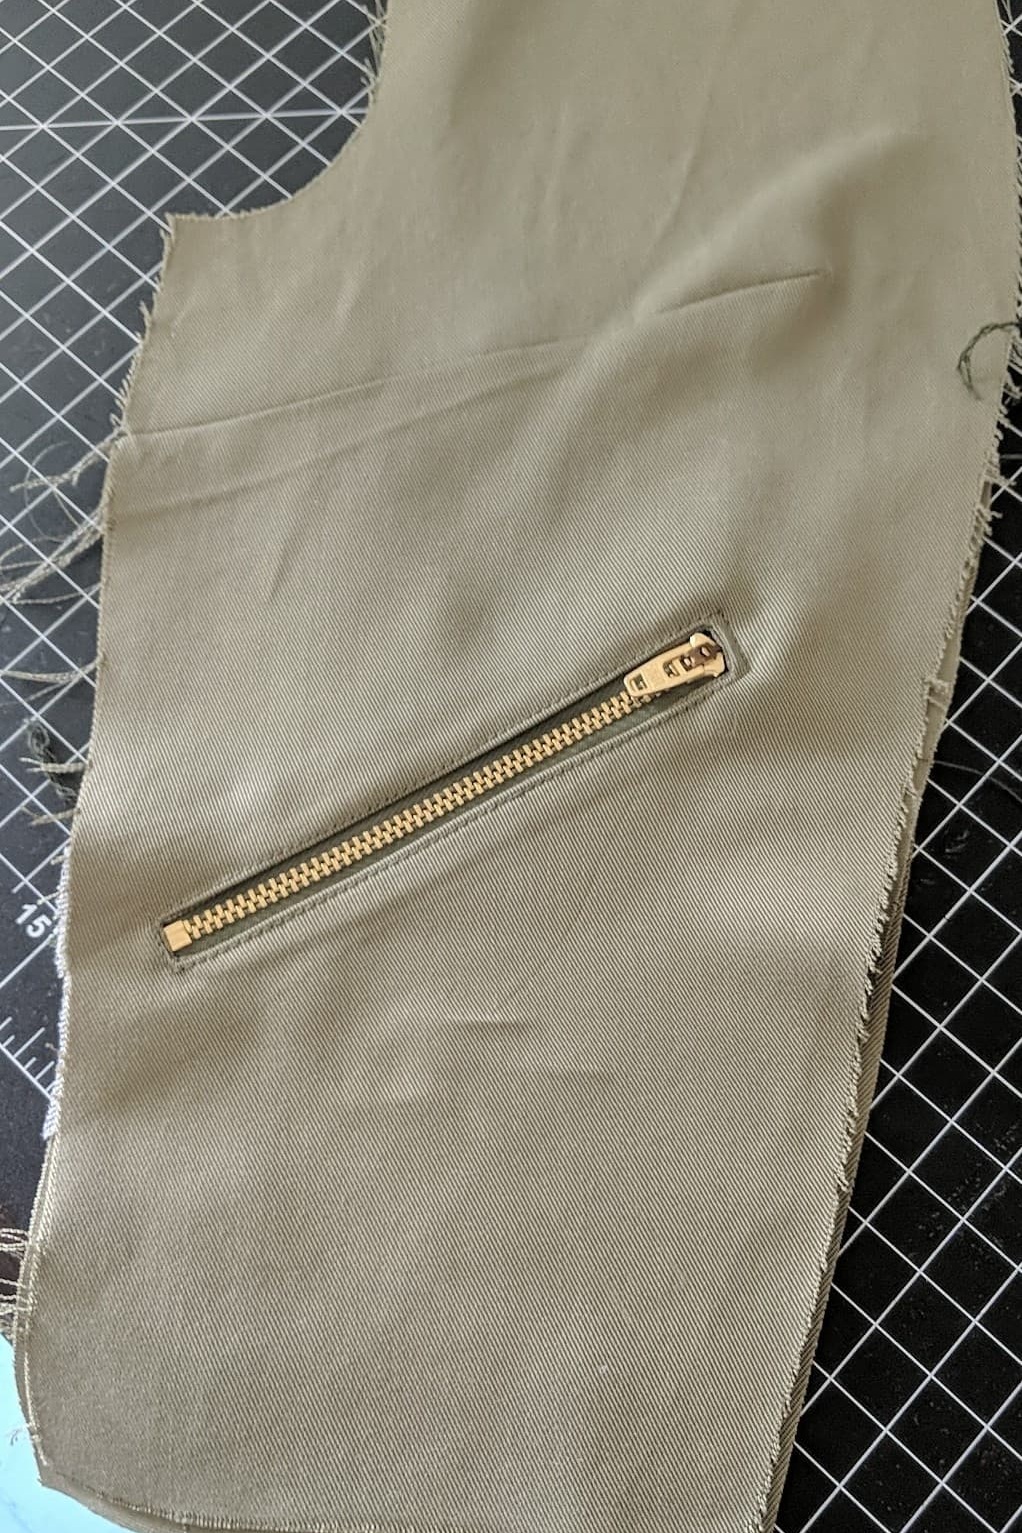 zippered pocket